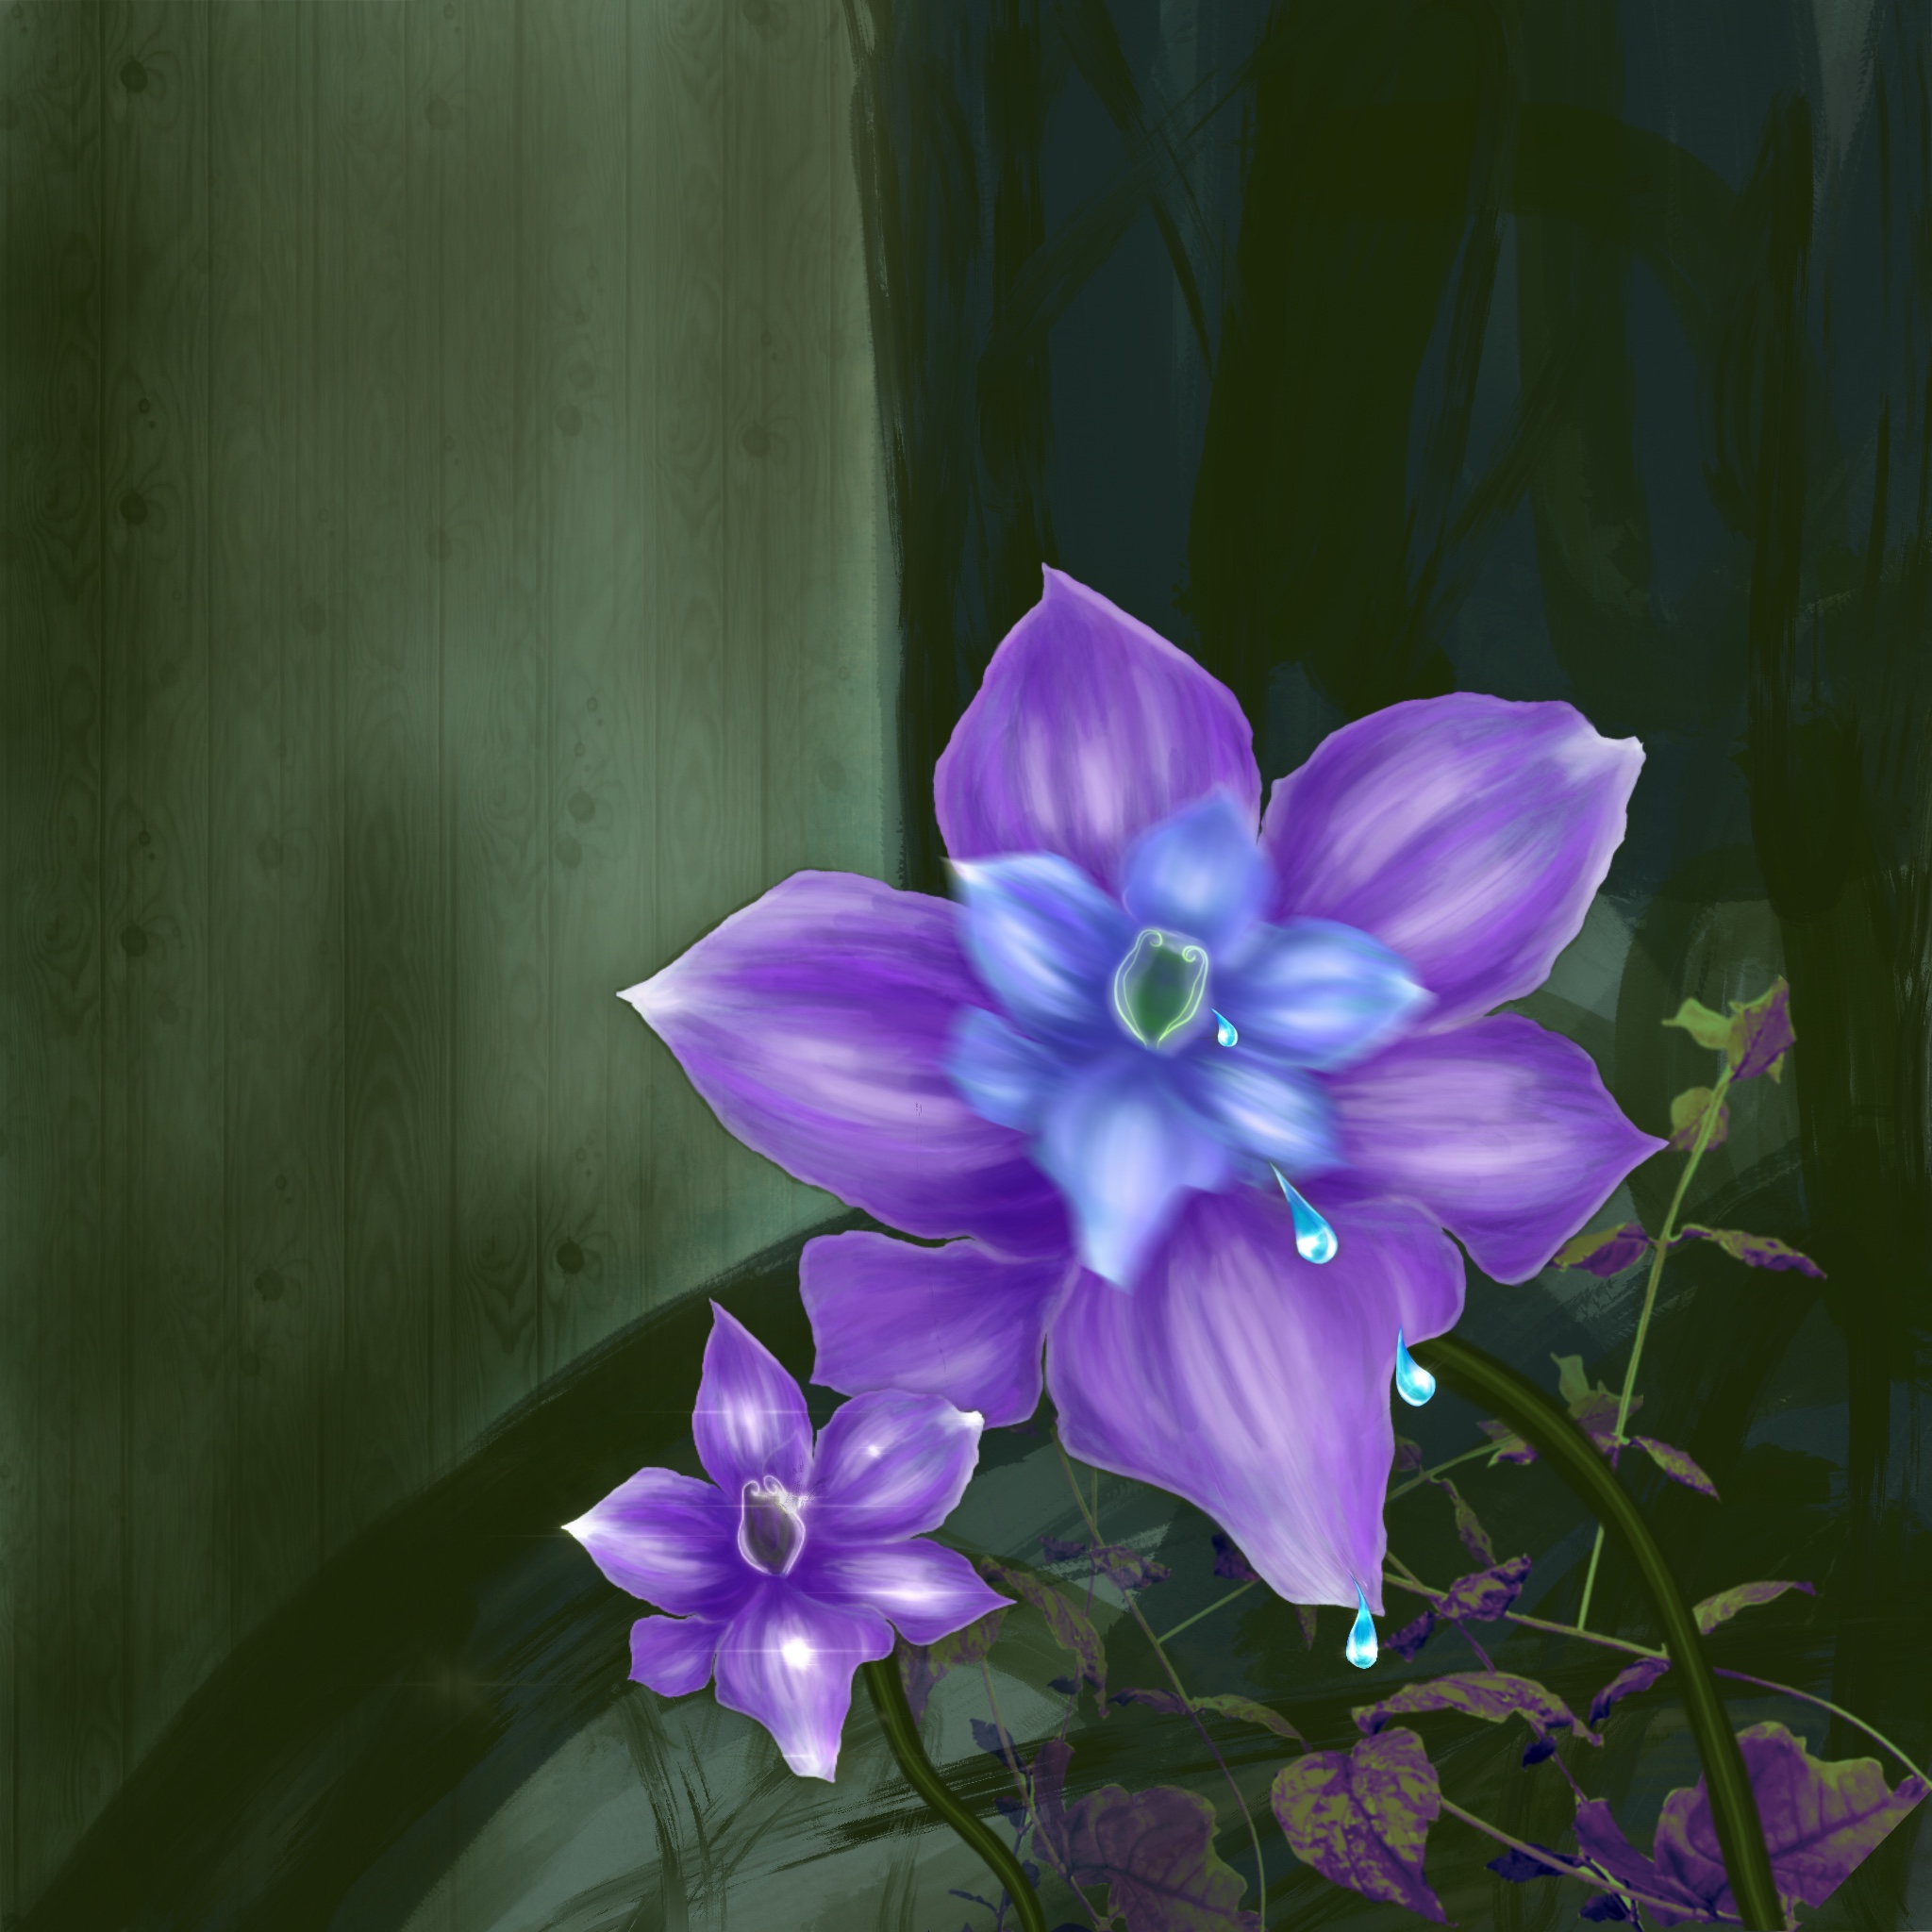 Flor Oscura (Dark Flower)